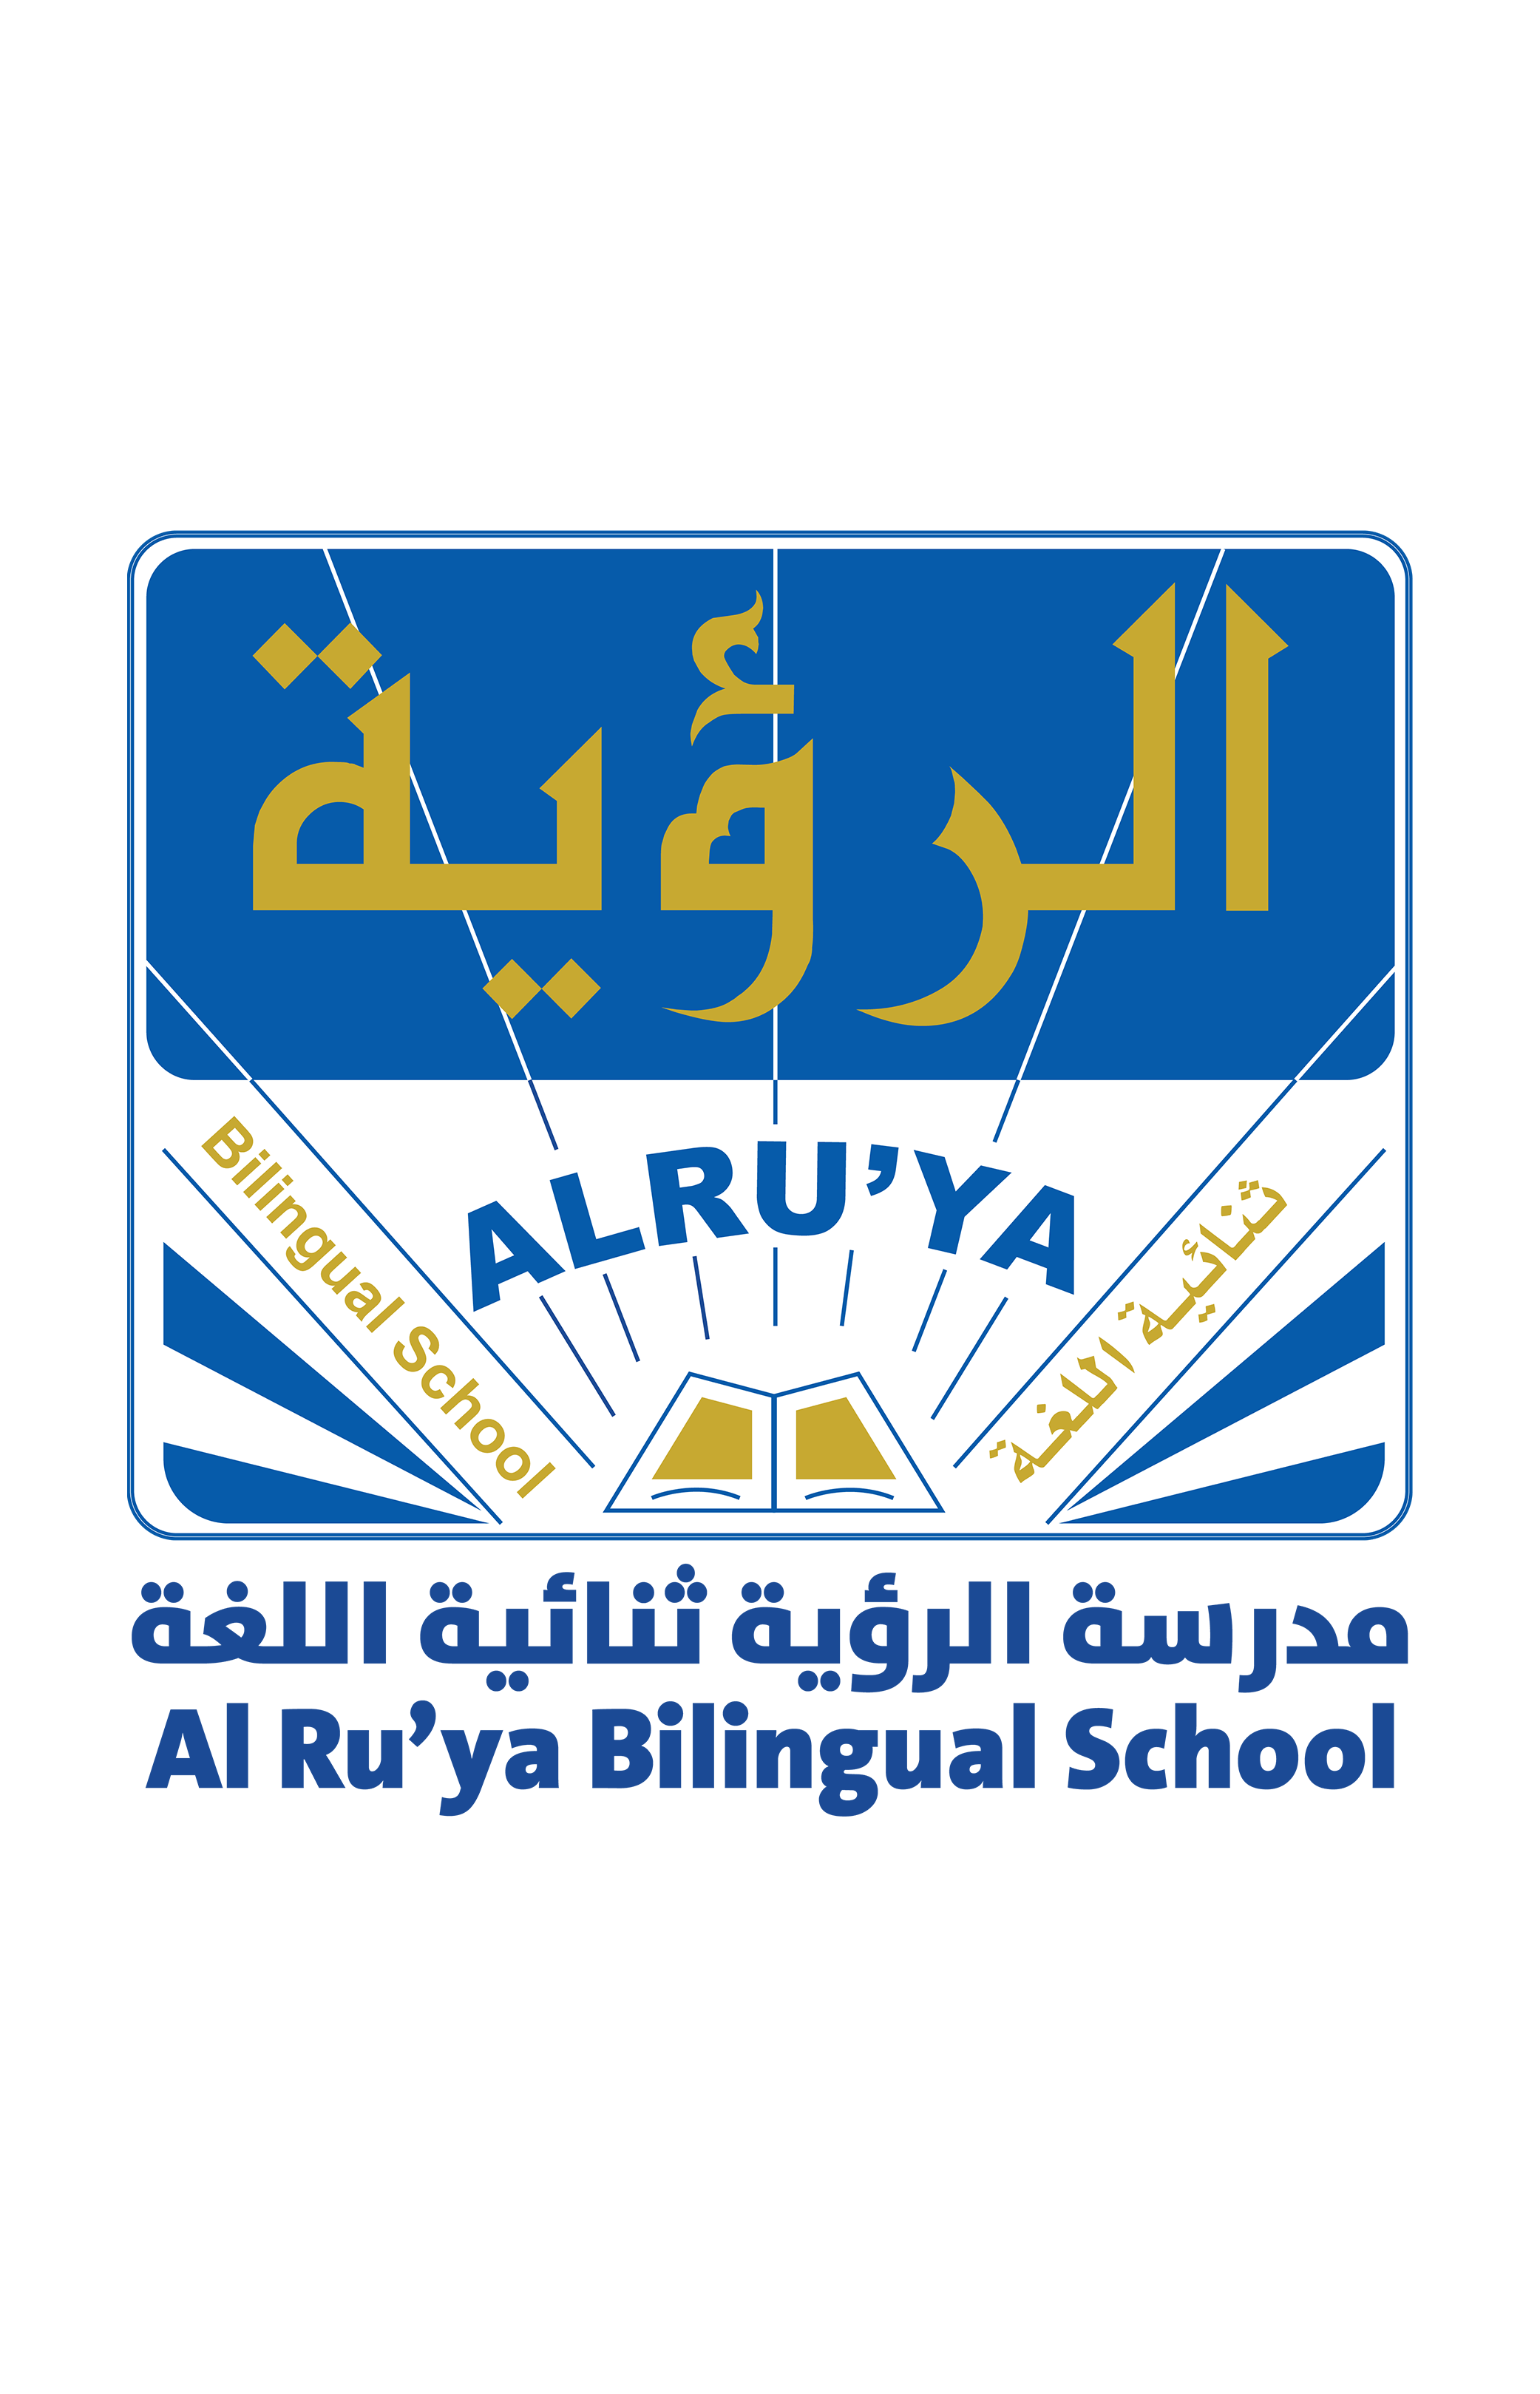 AlRuya Bilingual School (RBS) Logo